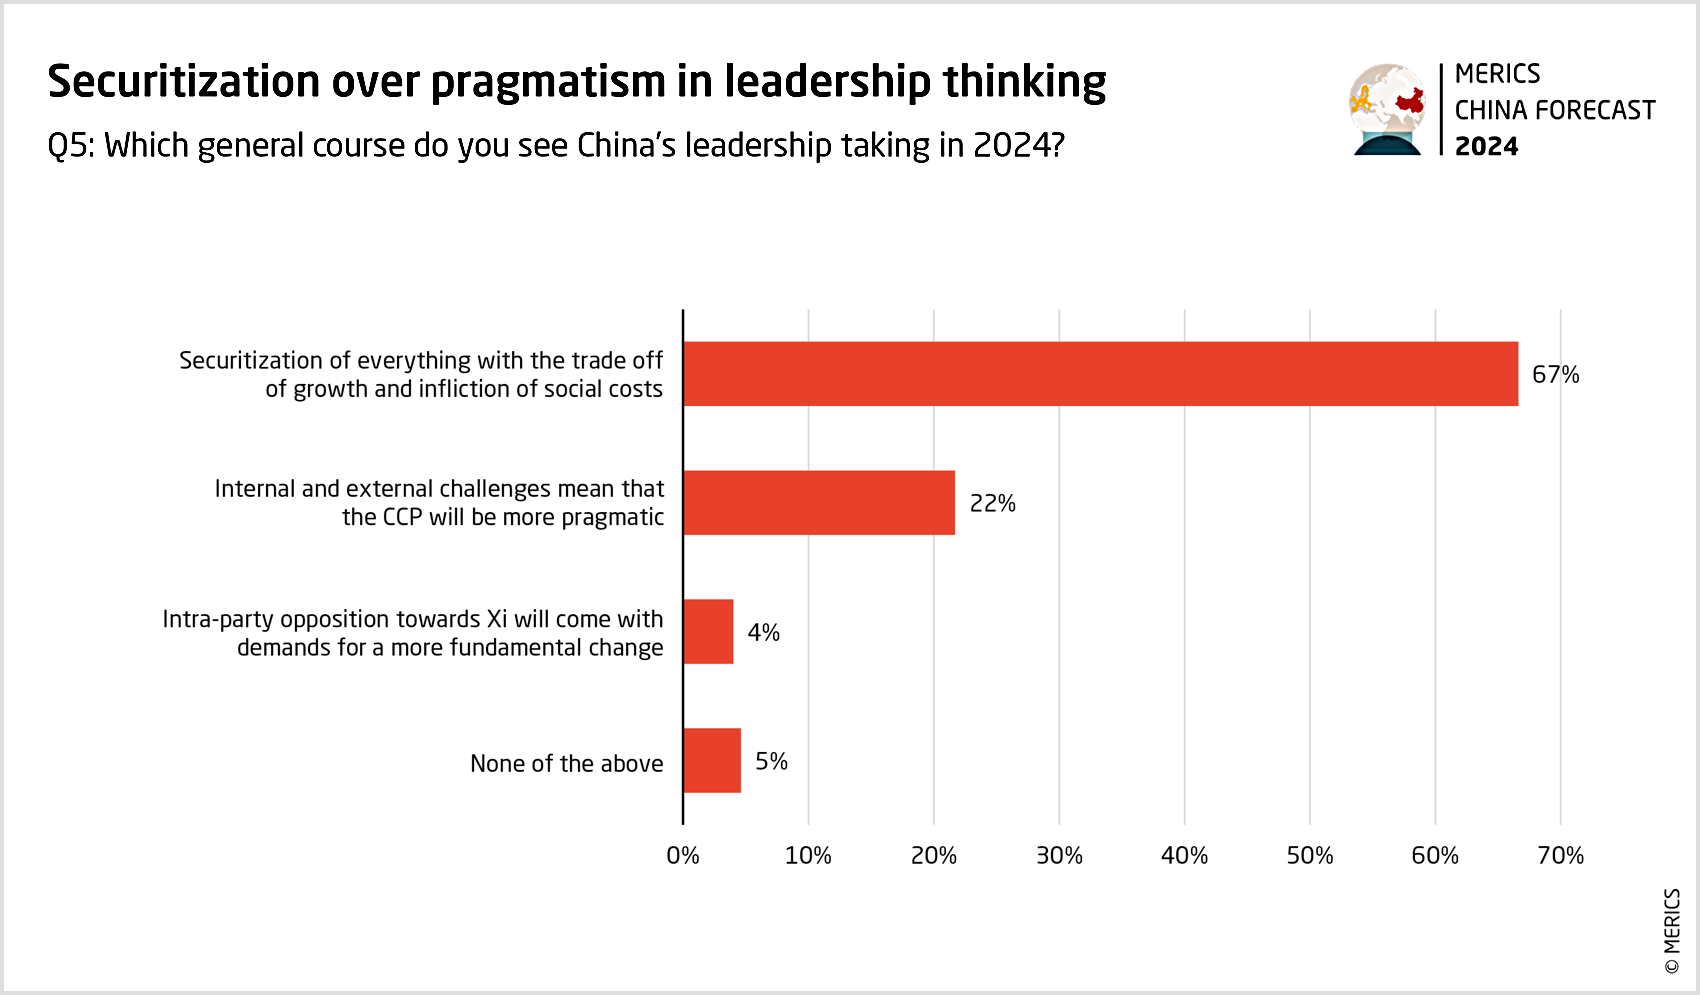 MERICS-China-Forecast-2024-Q5-securitization-over-pragmatism-in-leadership-thinking.png